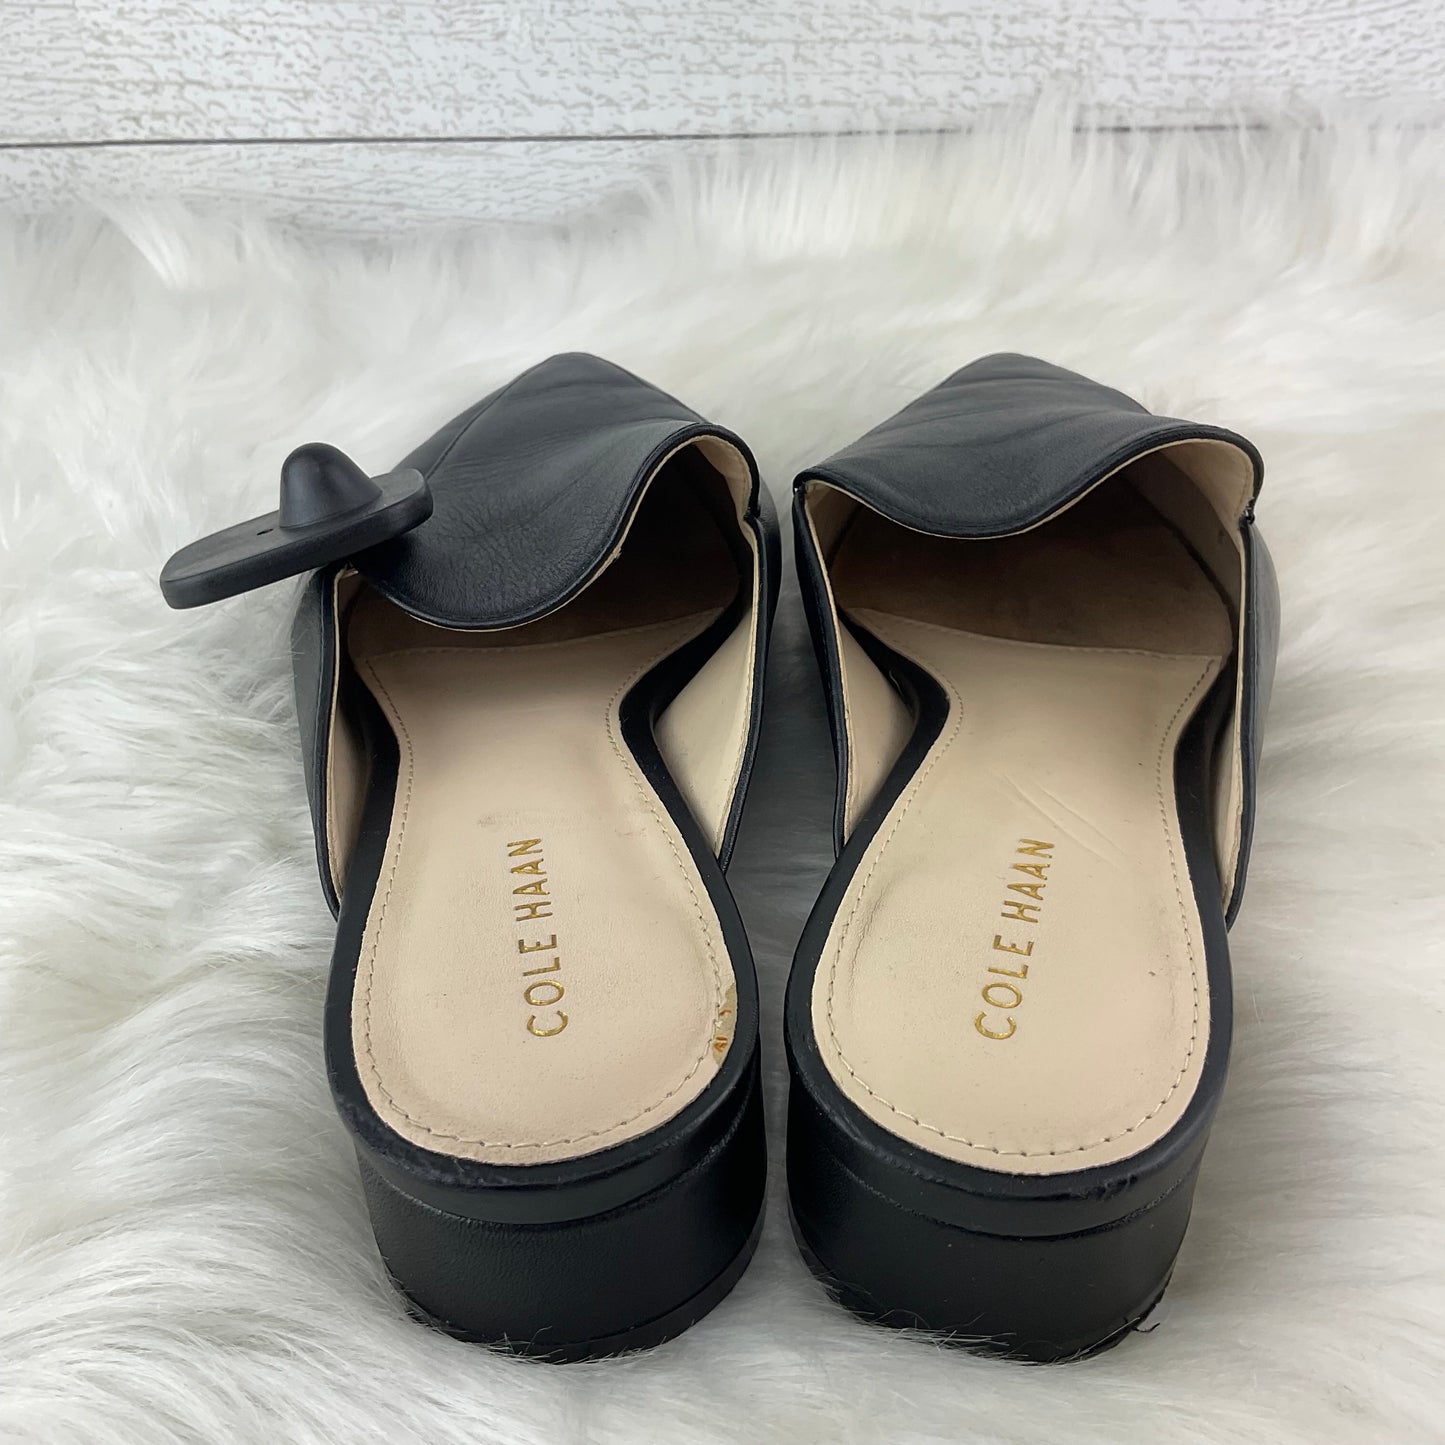 Black Shoes Flats Cole-haan, Size 6